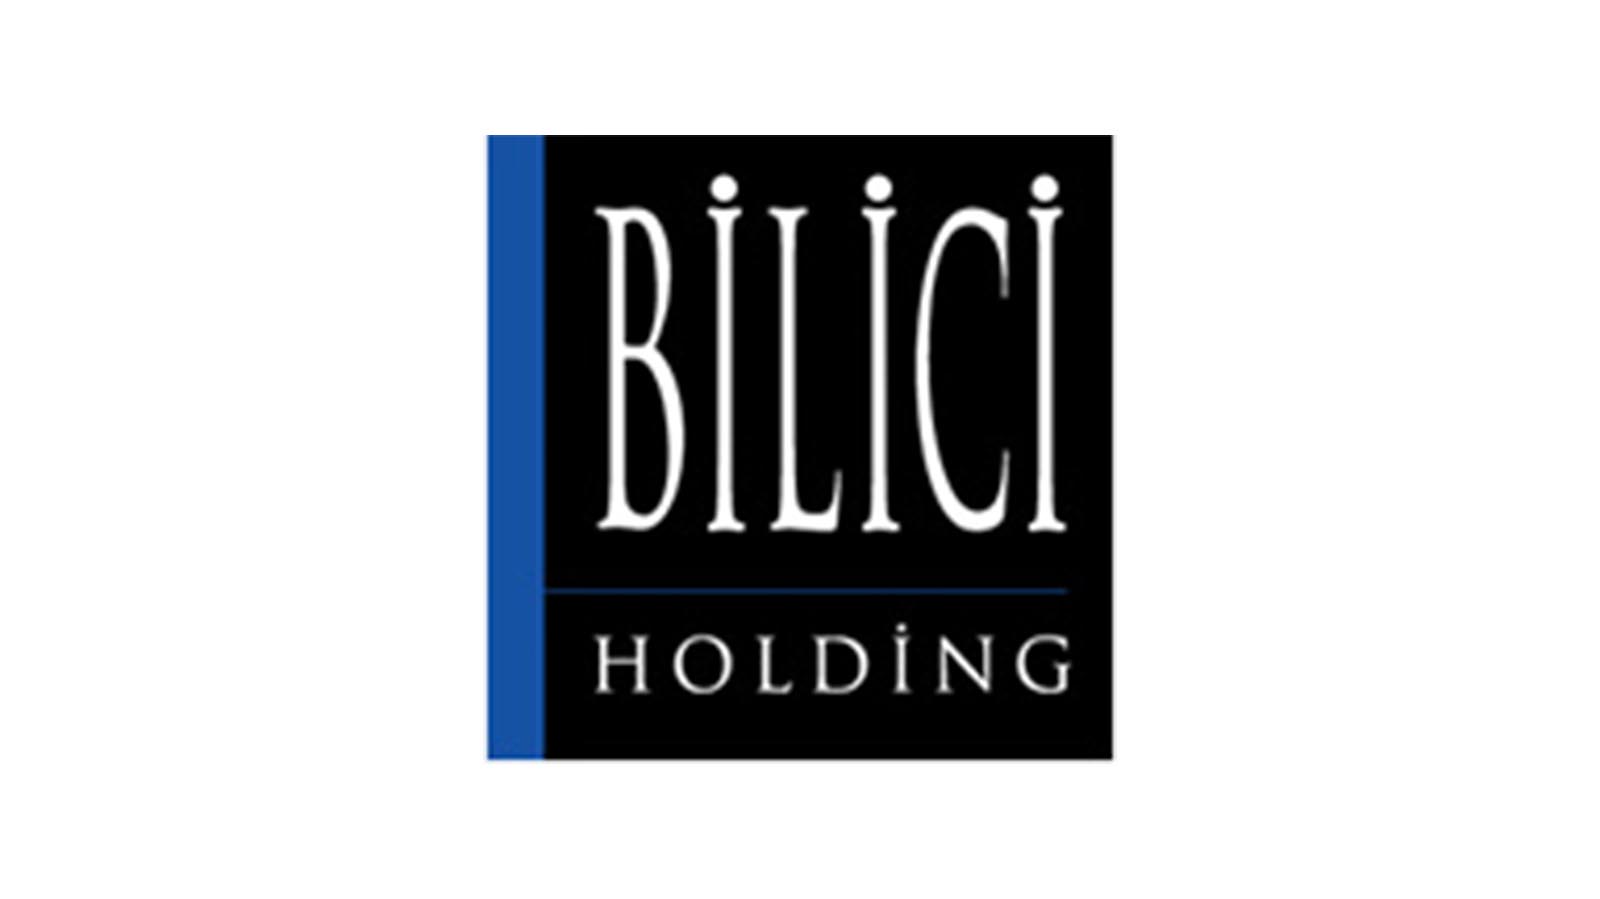 Bilici Holding